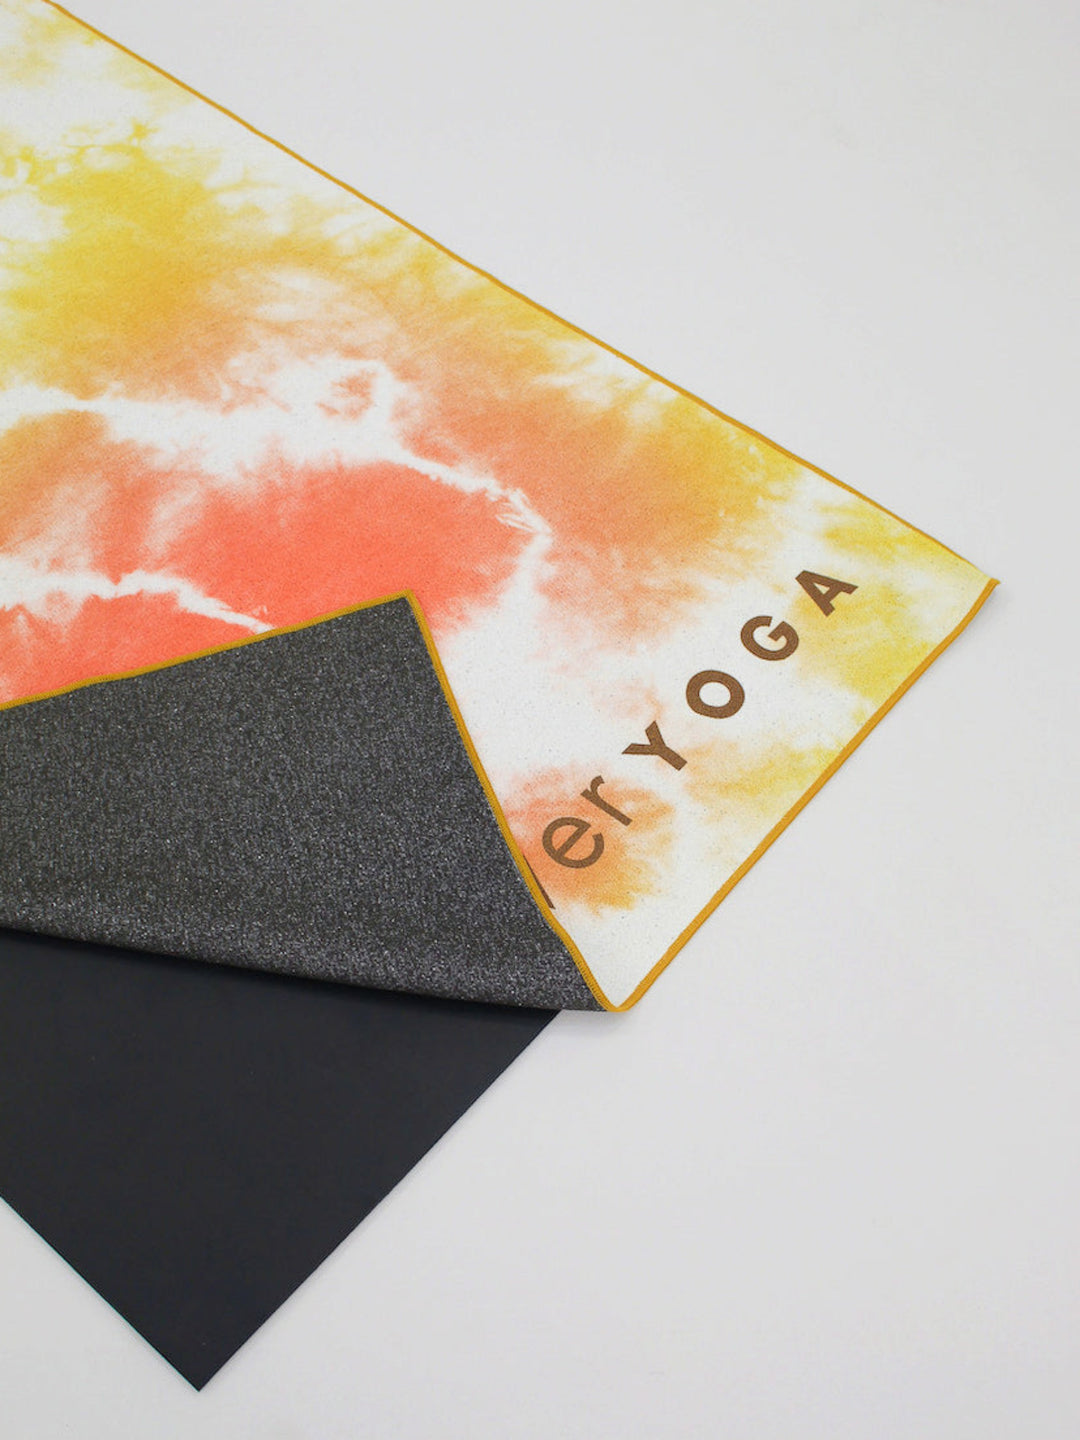 Nomadix X CorePower Yoga Orange Tie Dye Towel